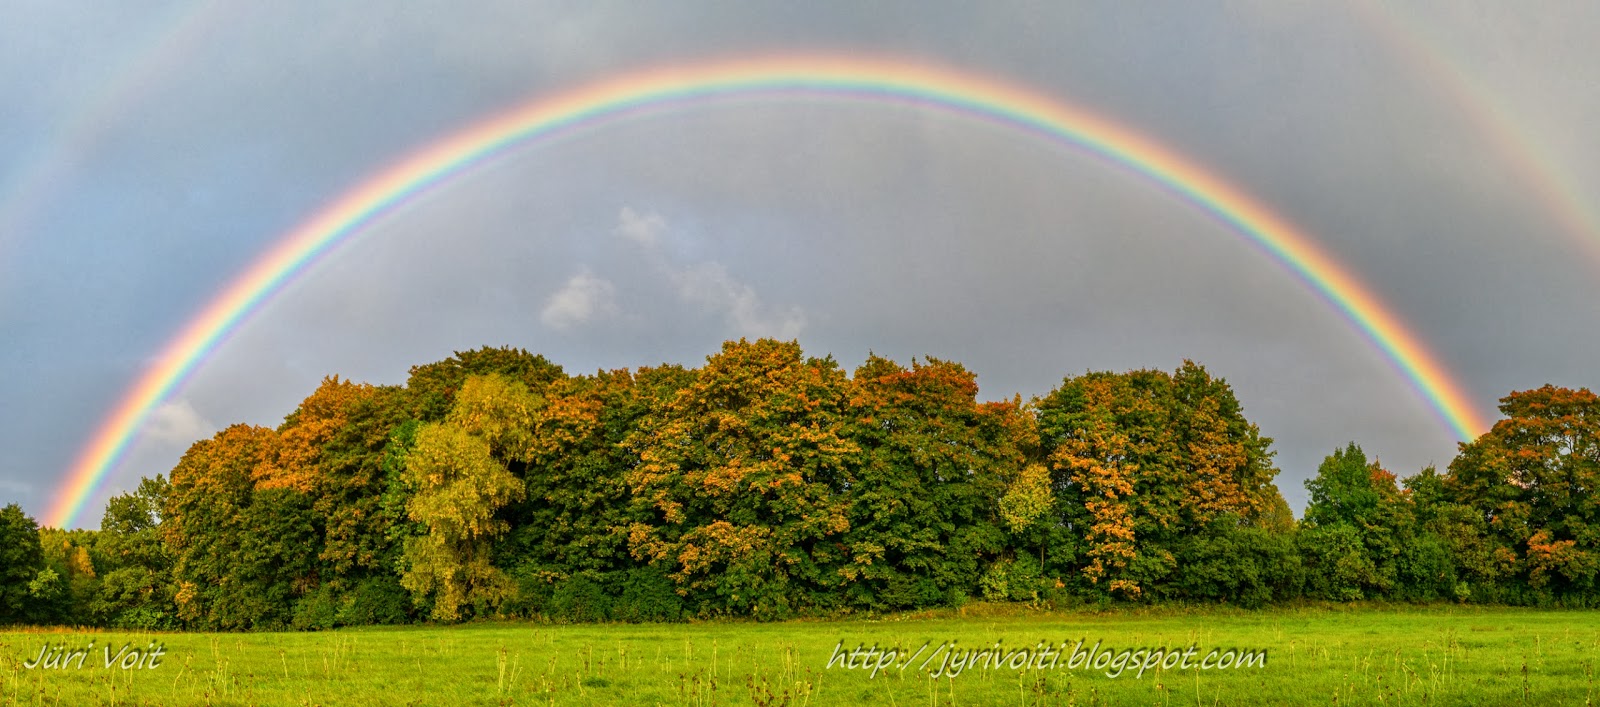 Double rainbow and autumn colors on EarthSky | Today's Image | EarthSky